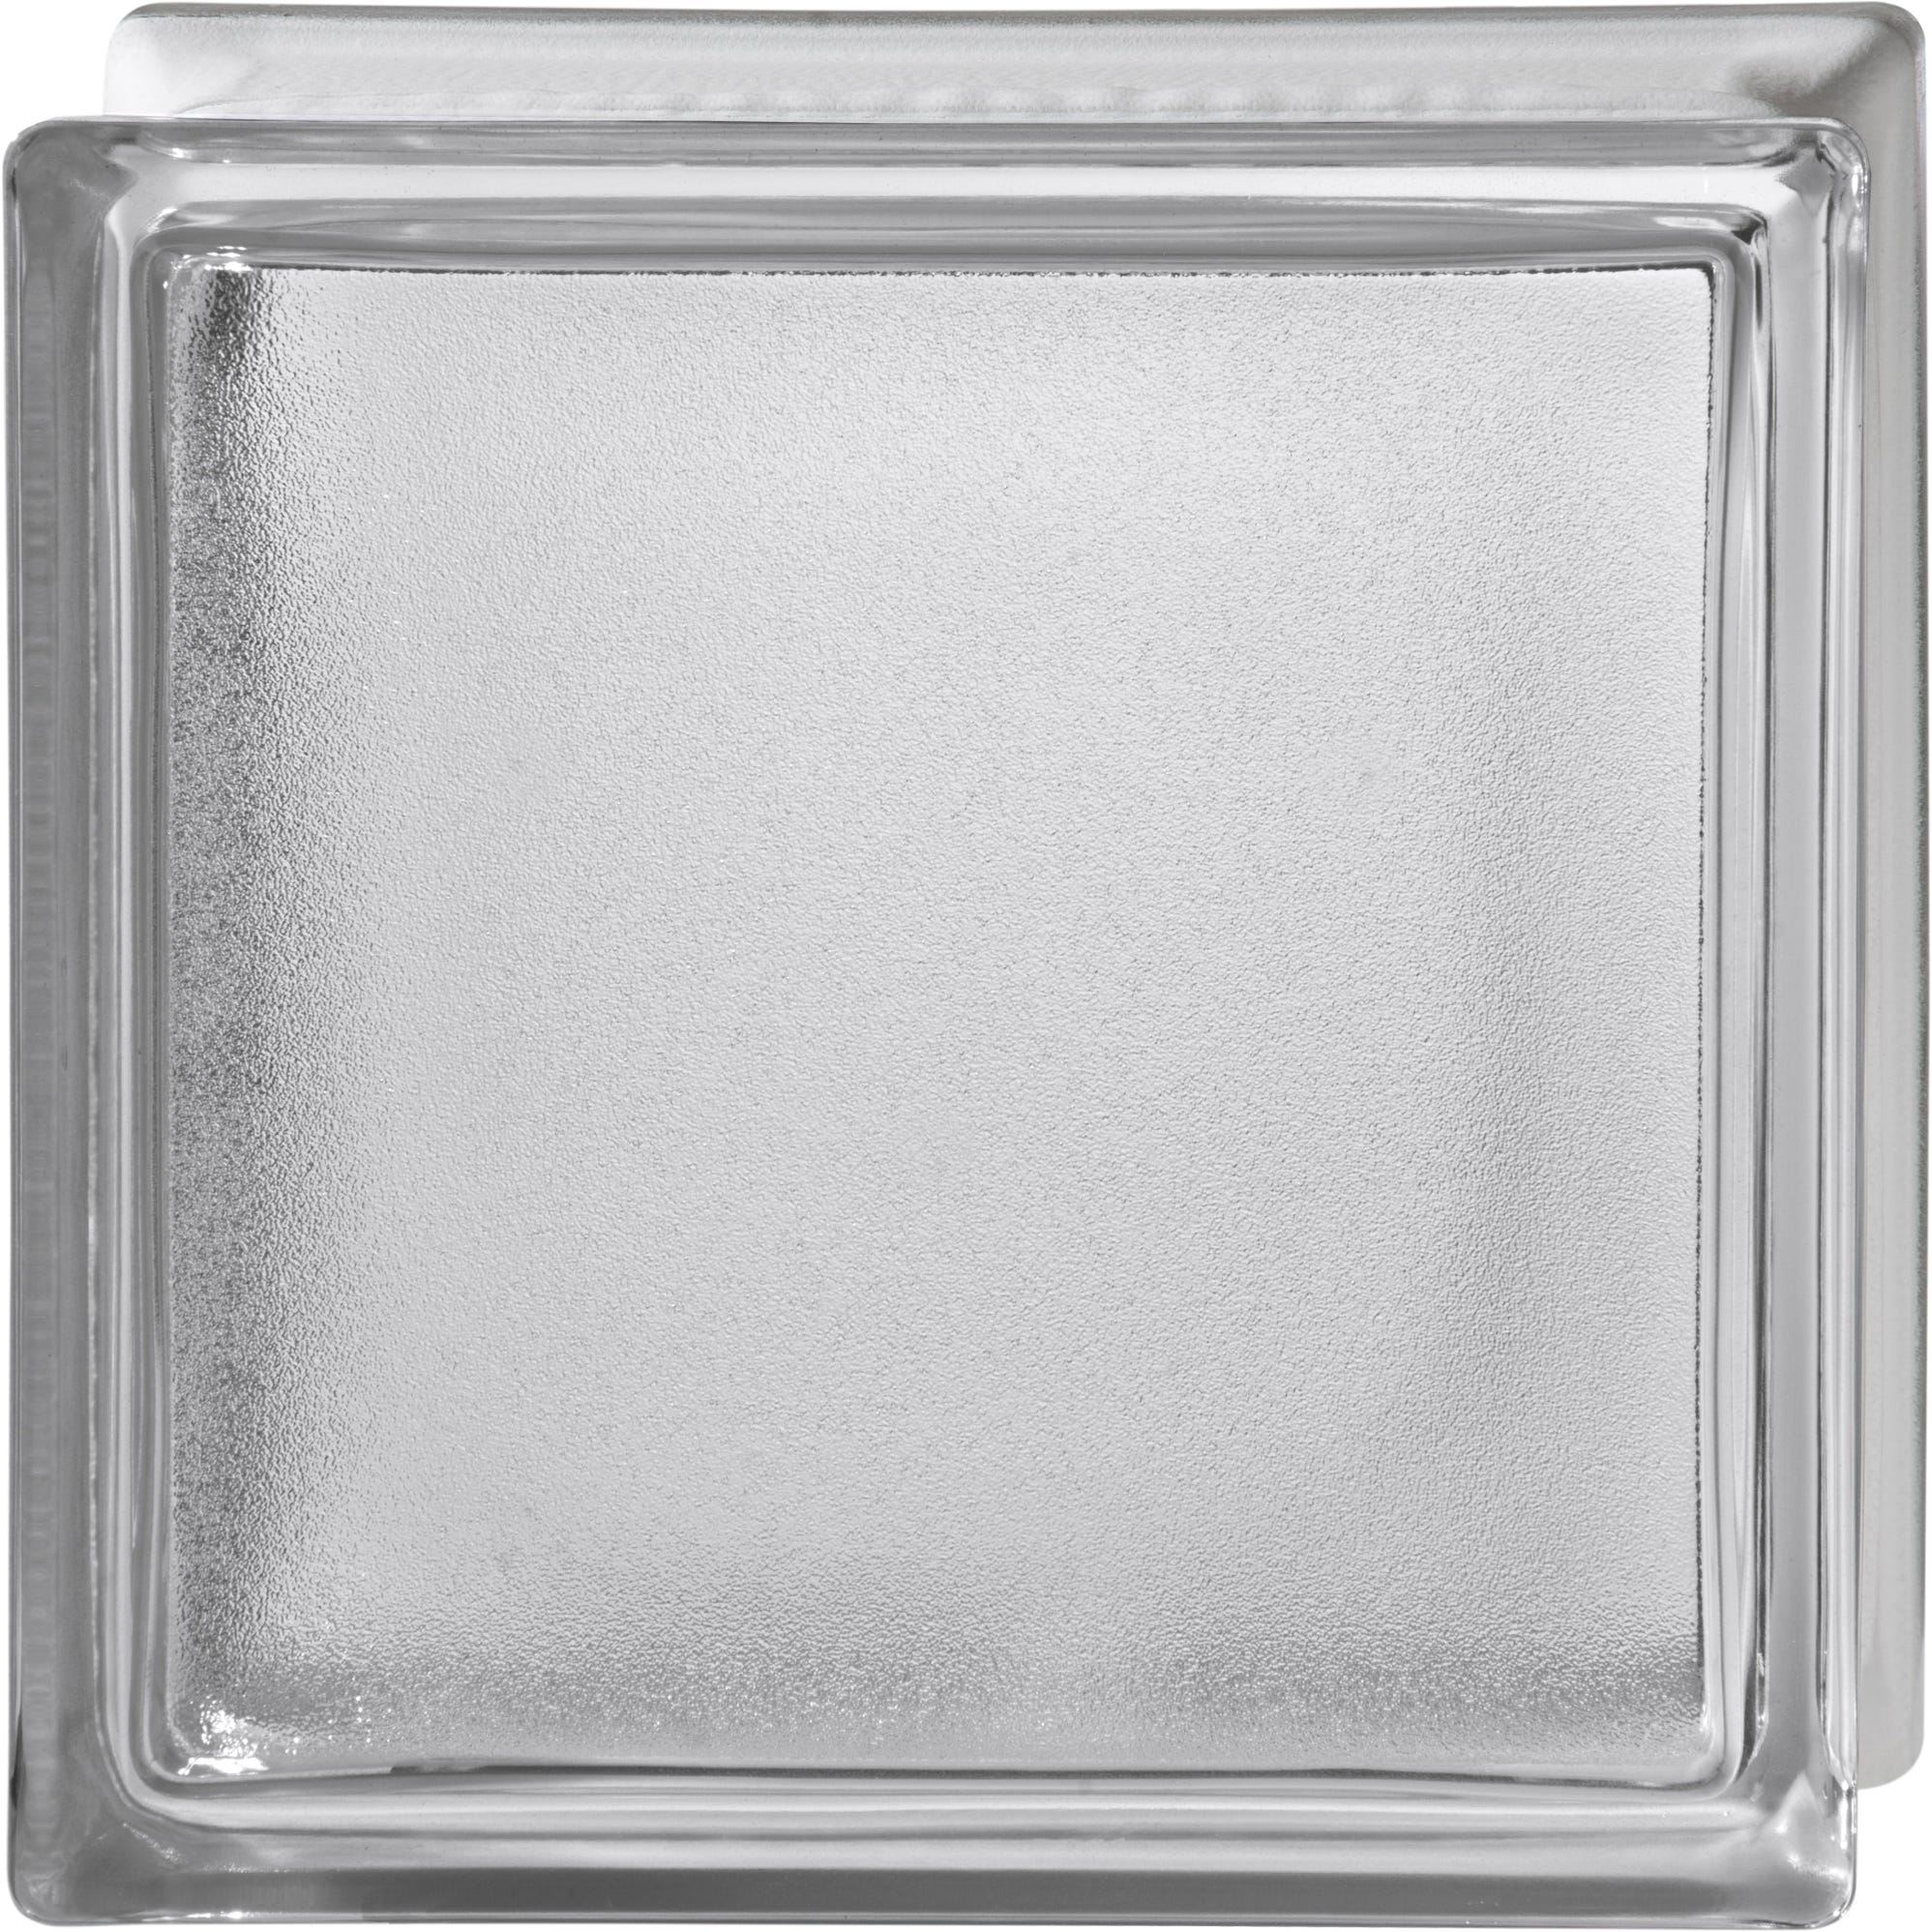 Bloque de vidrio gris 190x190x80 mm